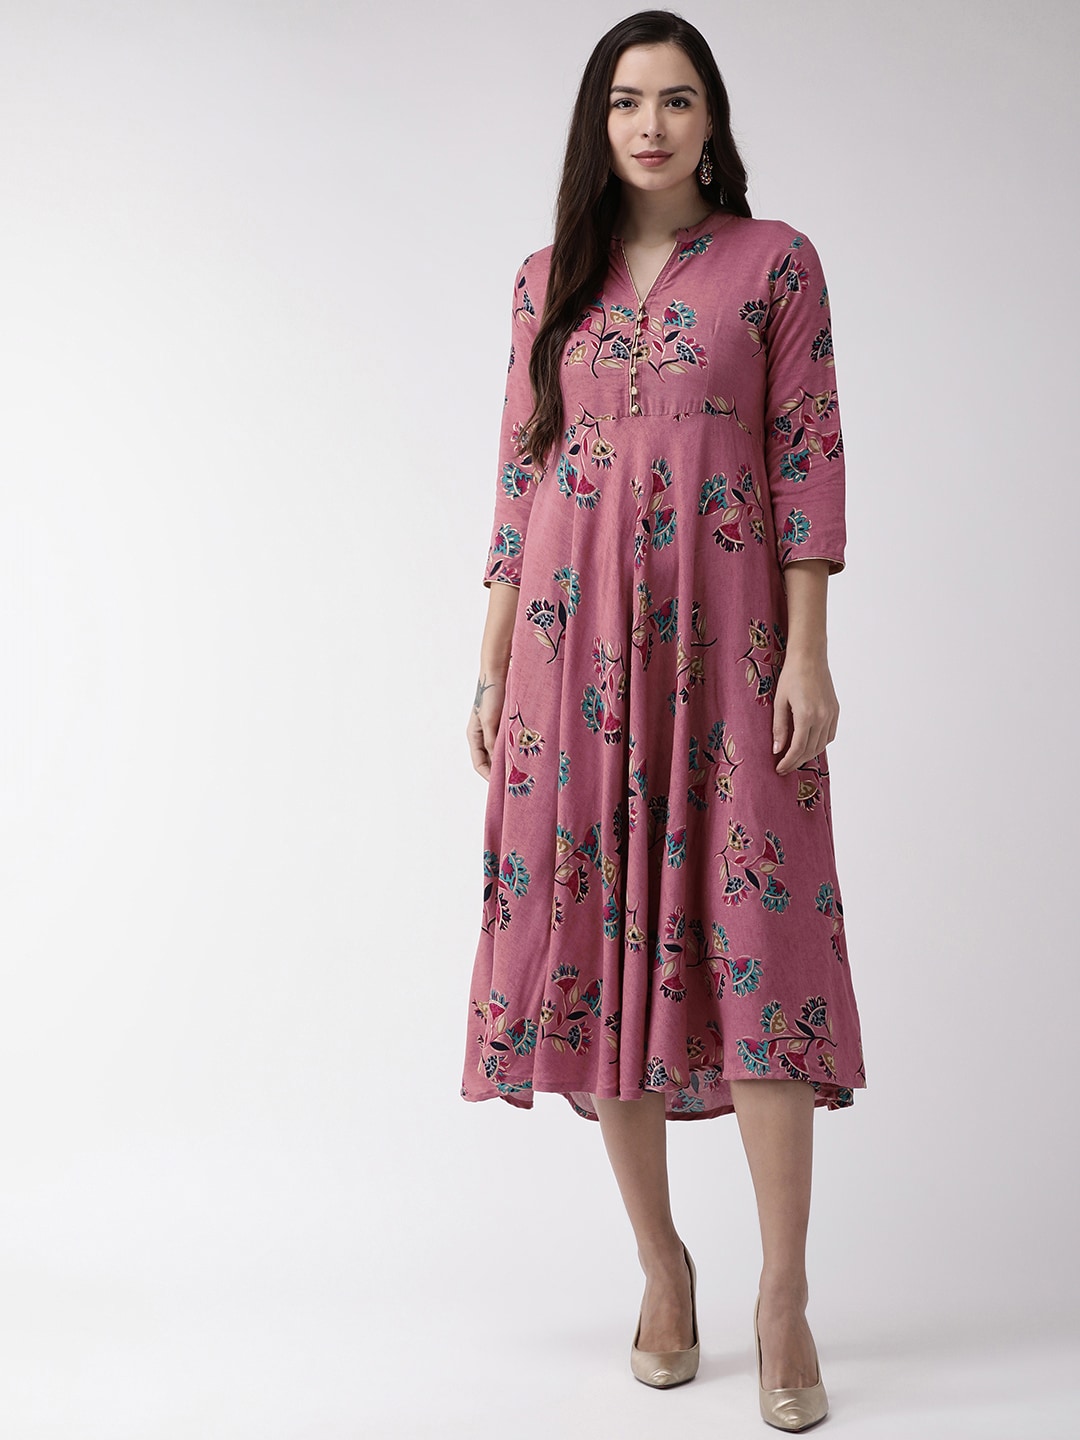 RANGMAYEE Women Pink & Green Printed A-Line Dress Price in India